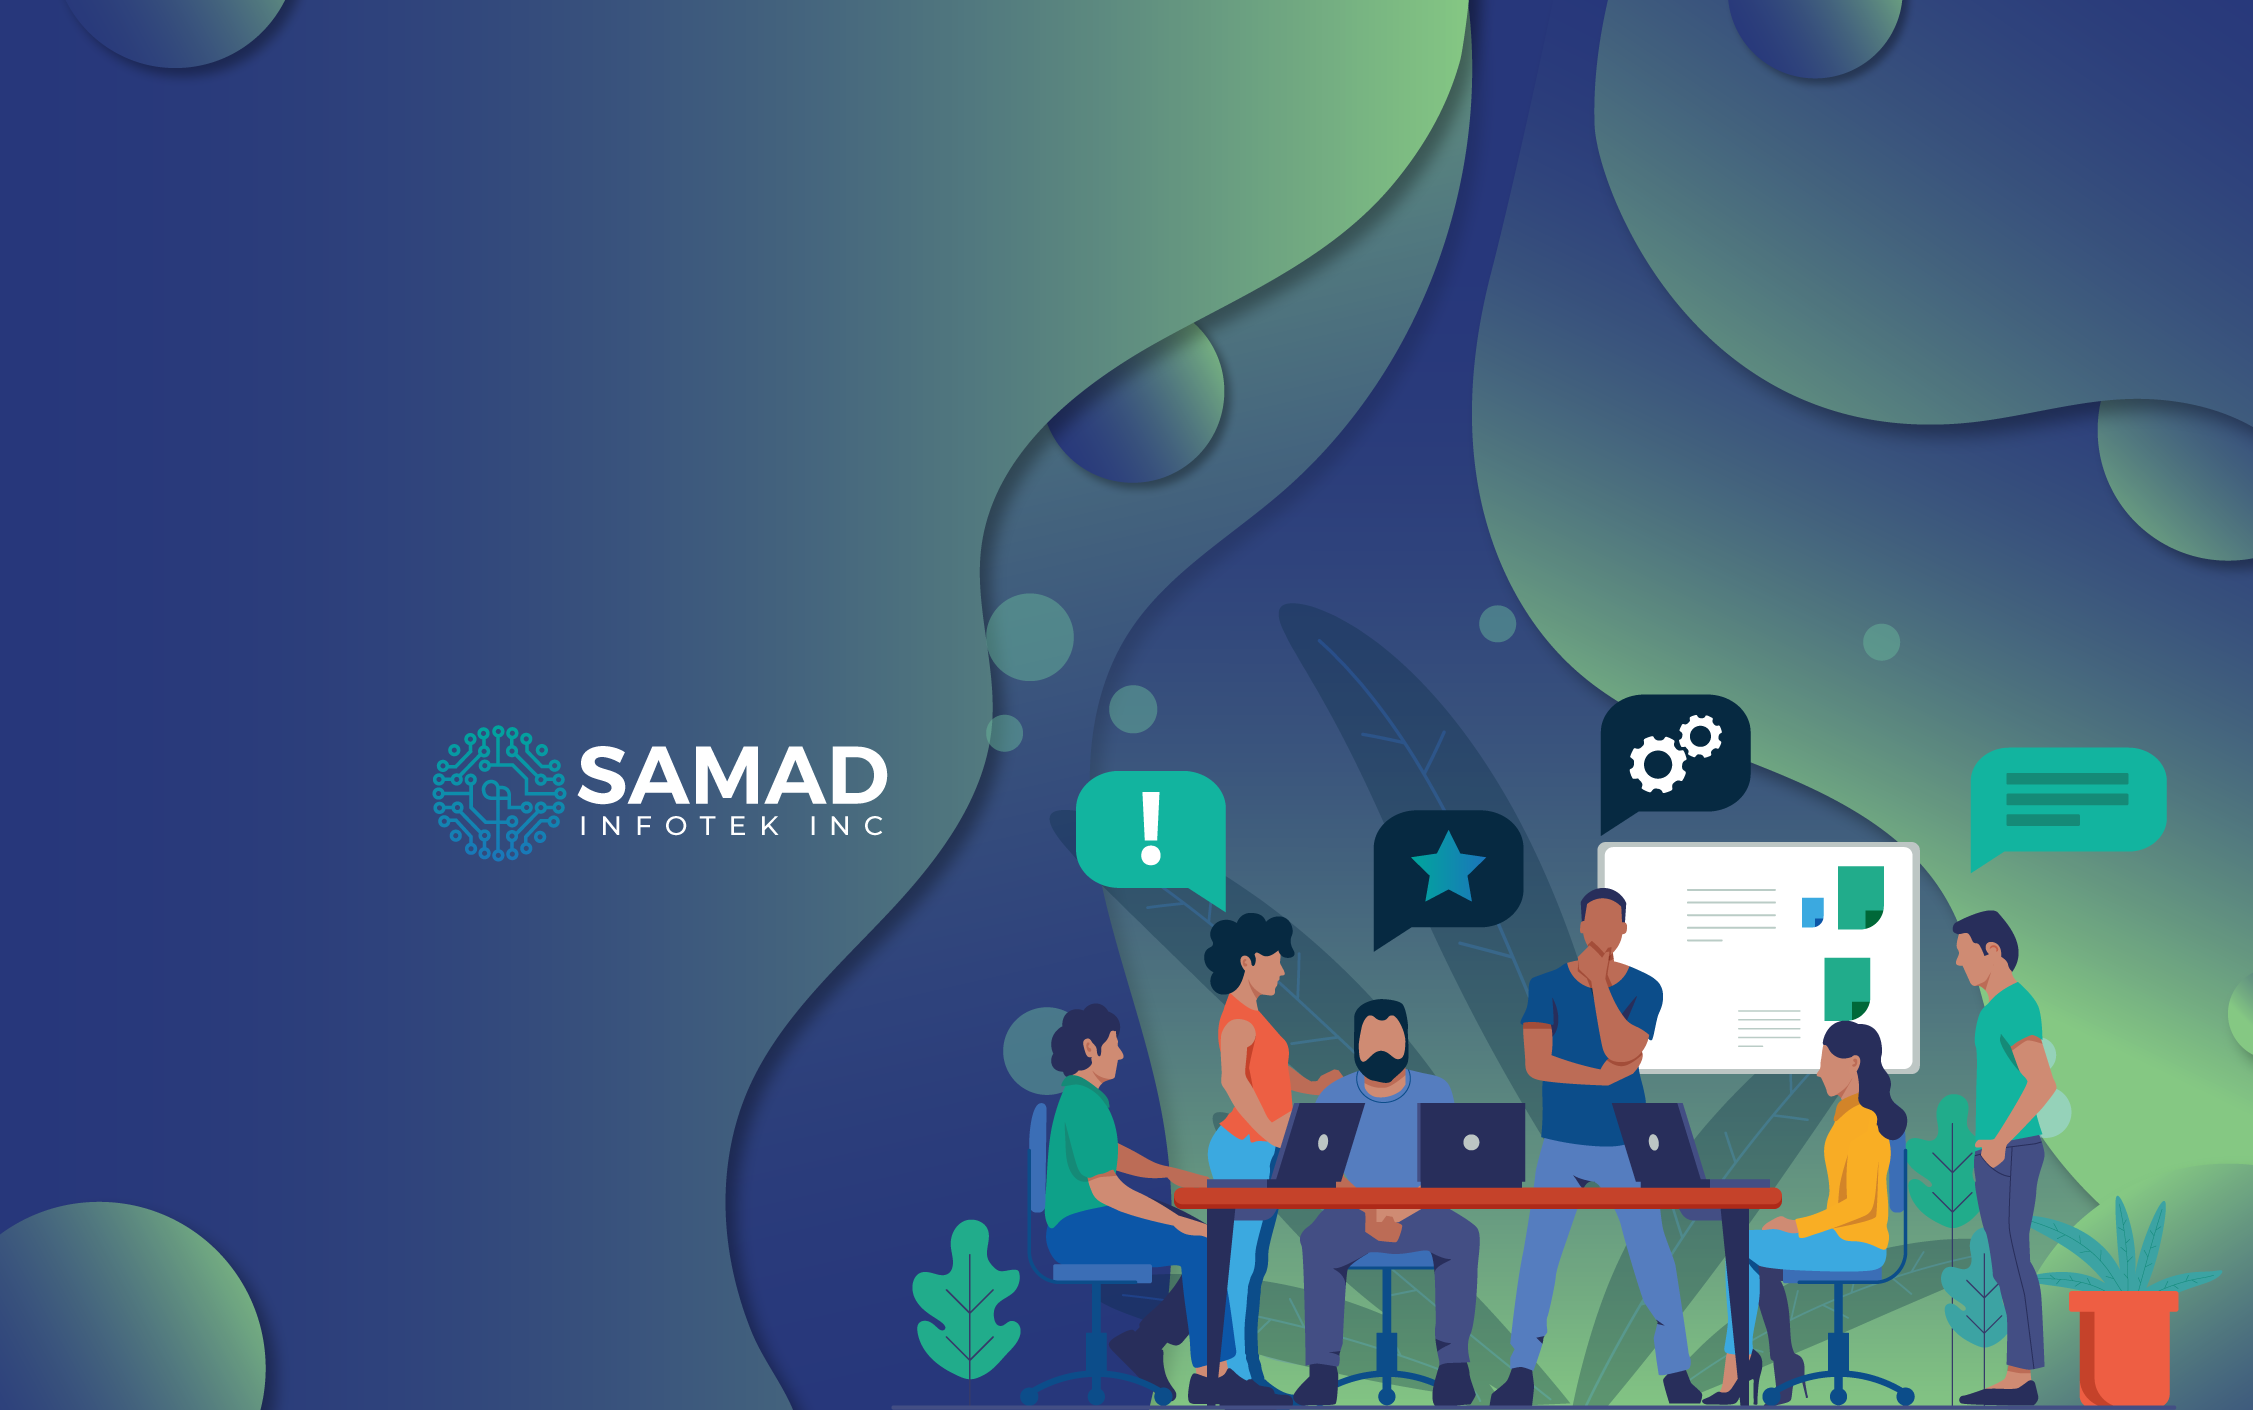 Samad Infotek